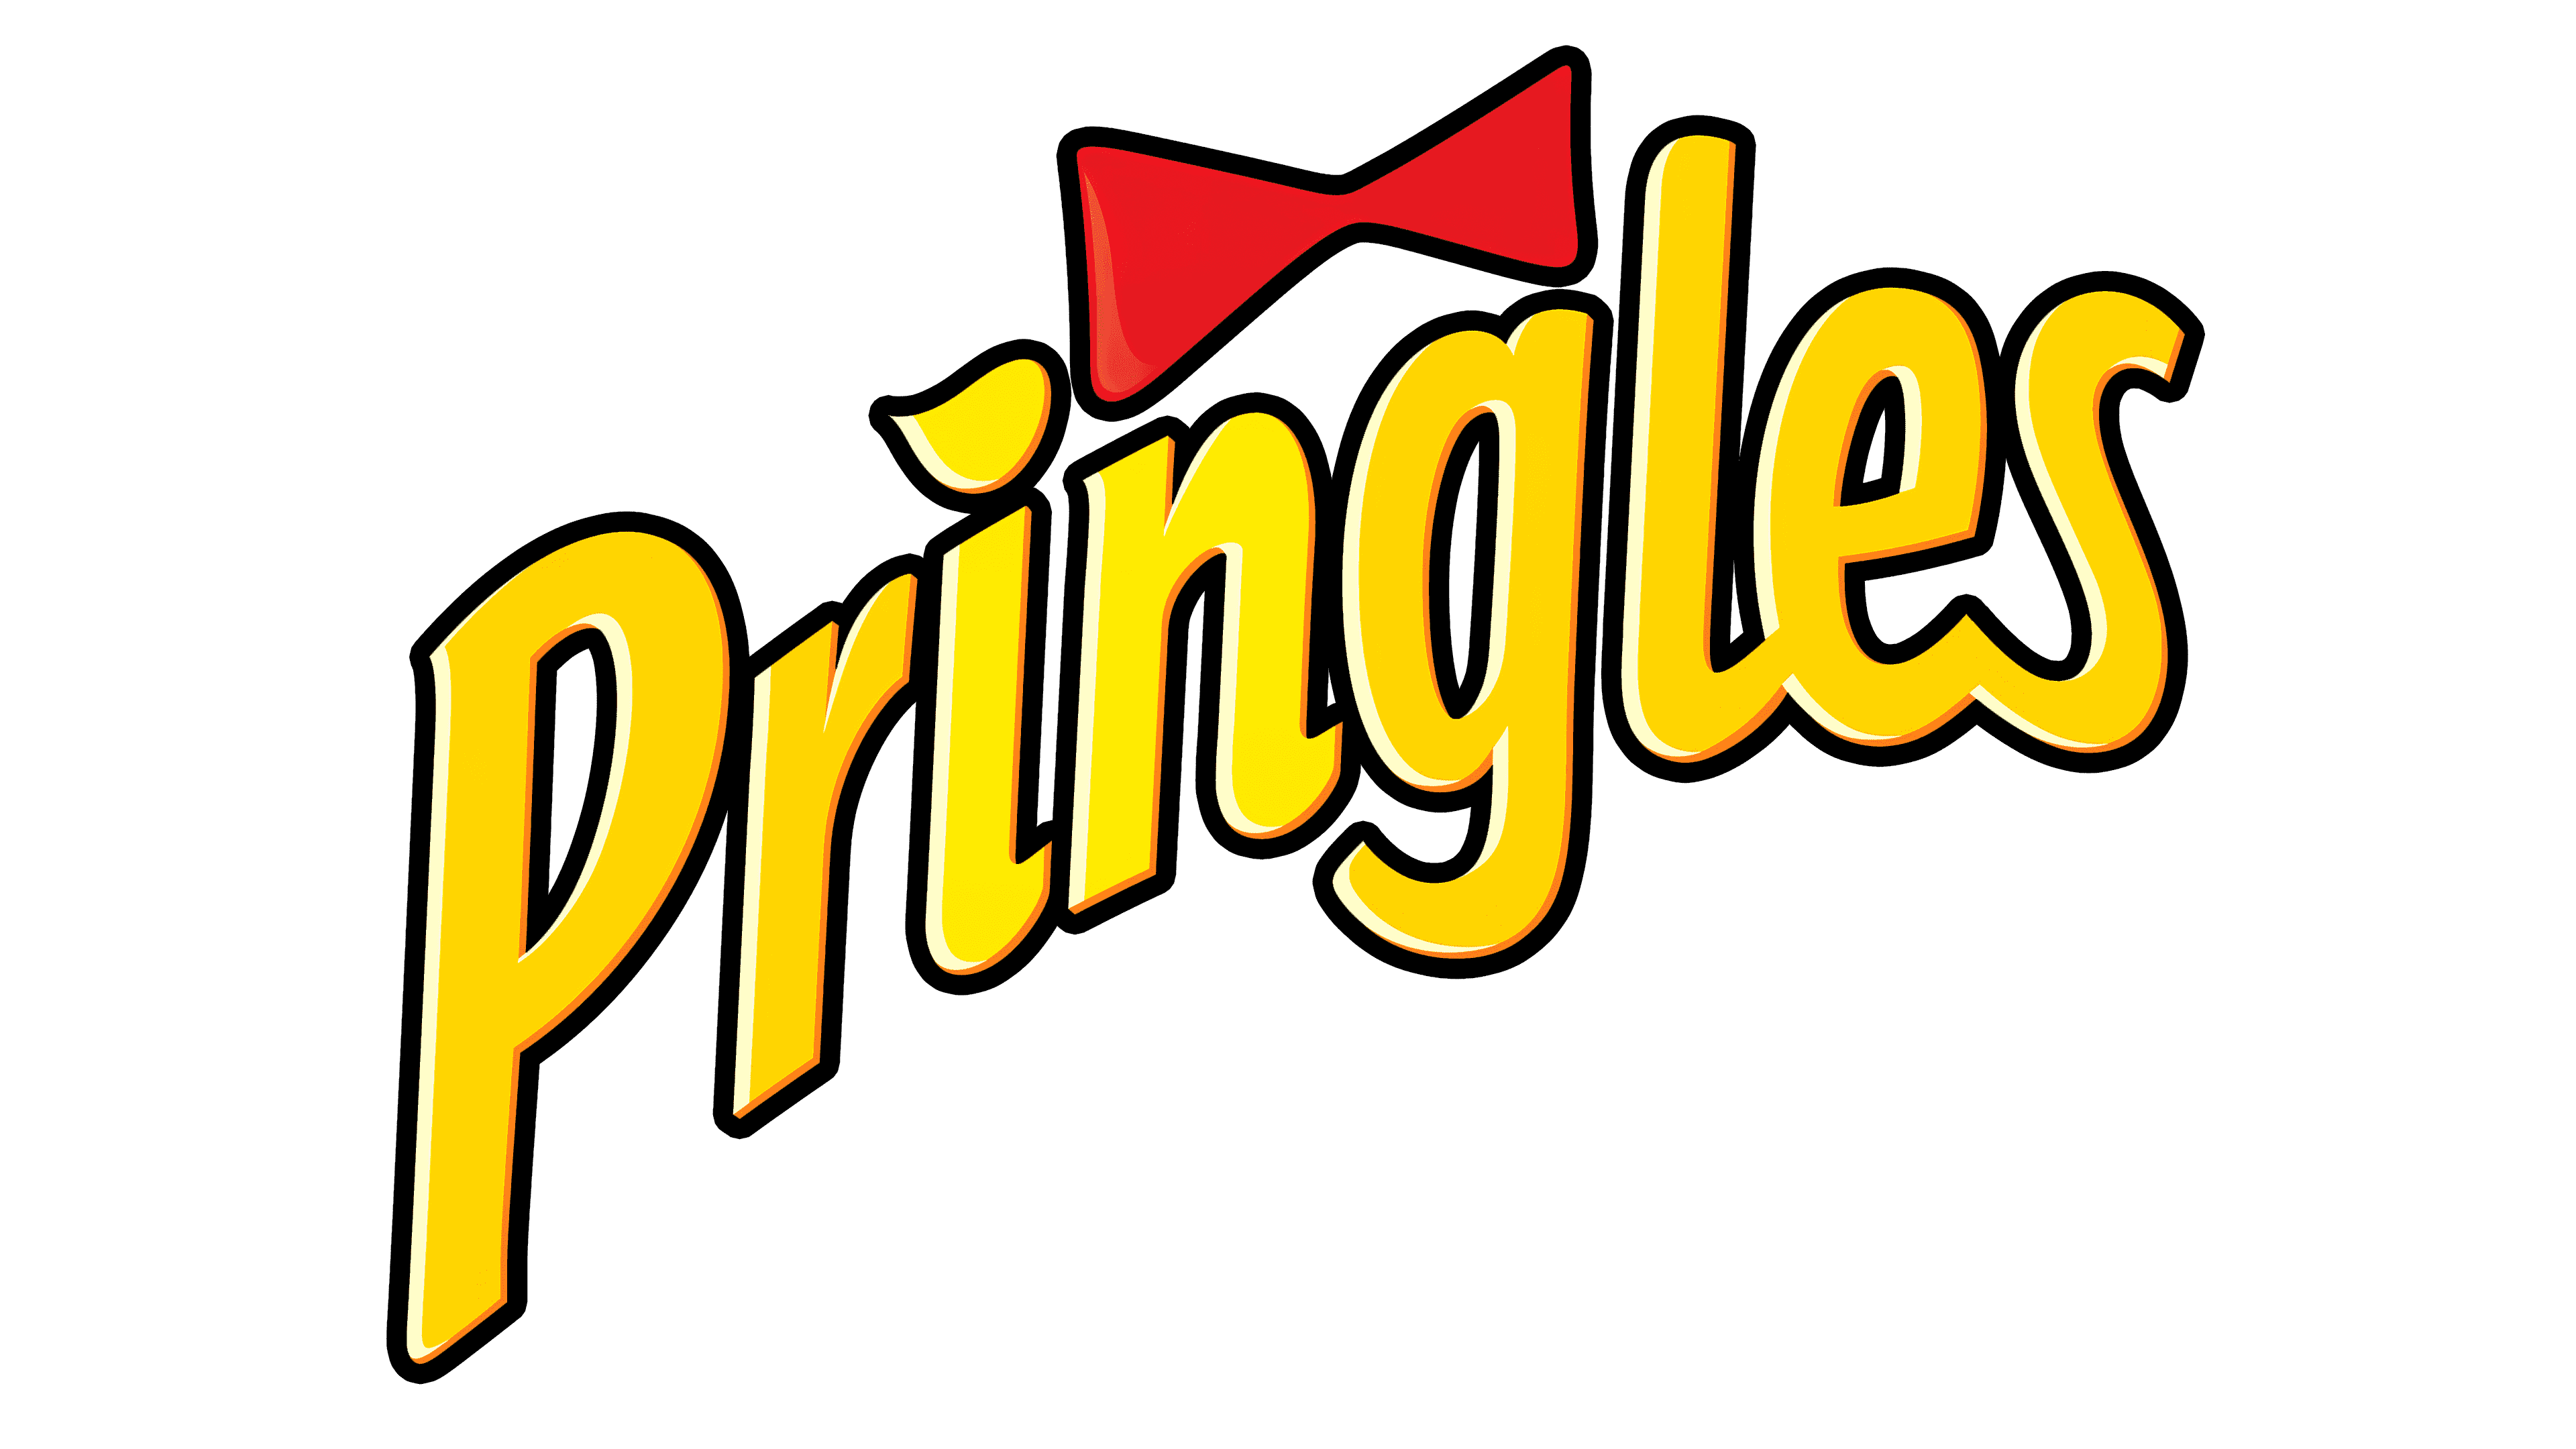 Pringles Logos - vrogue.co